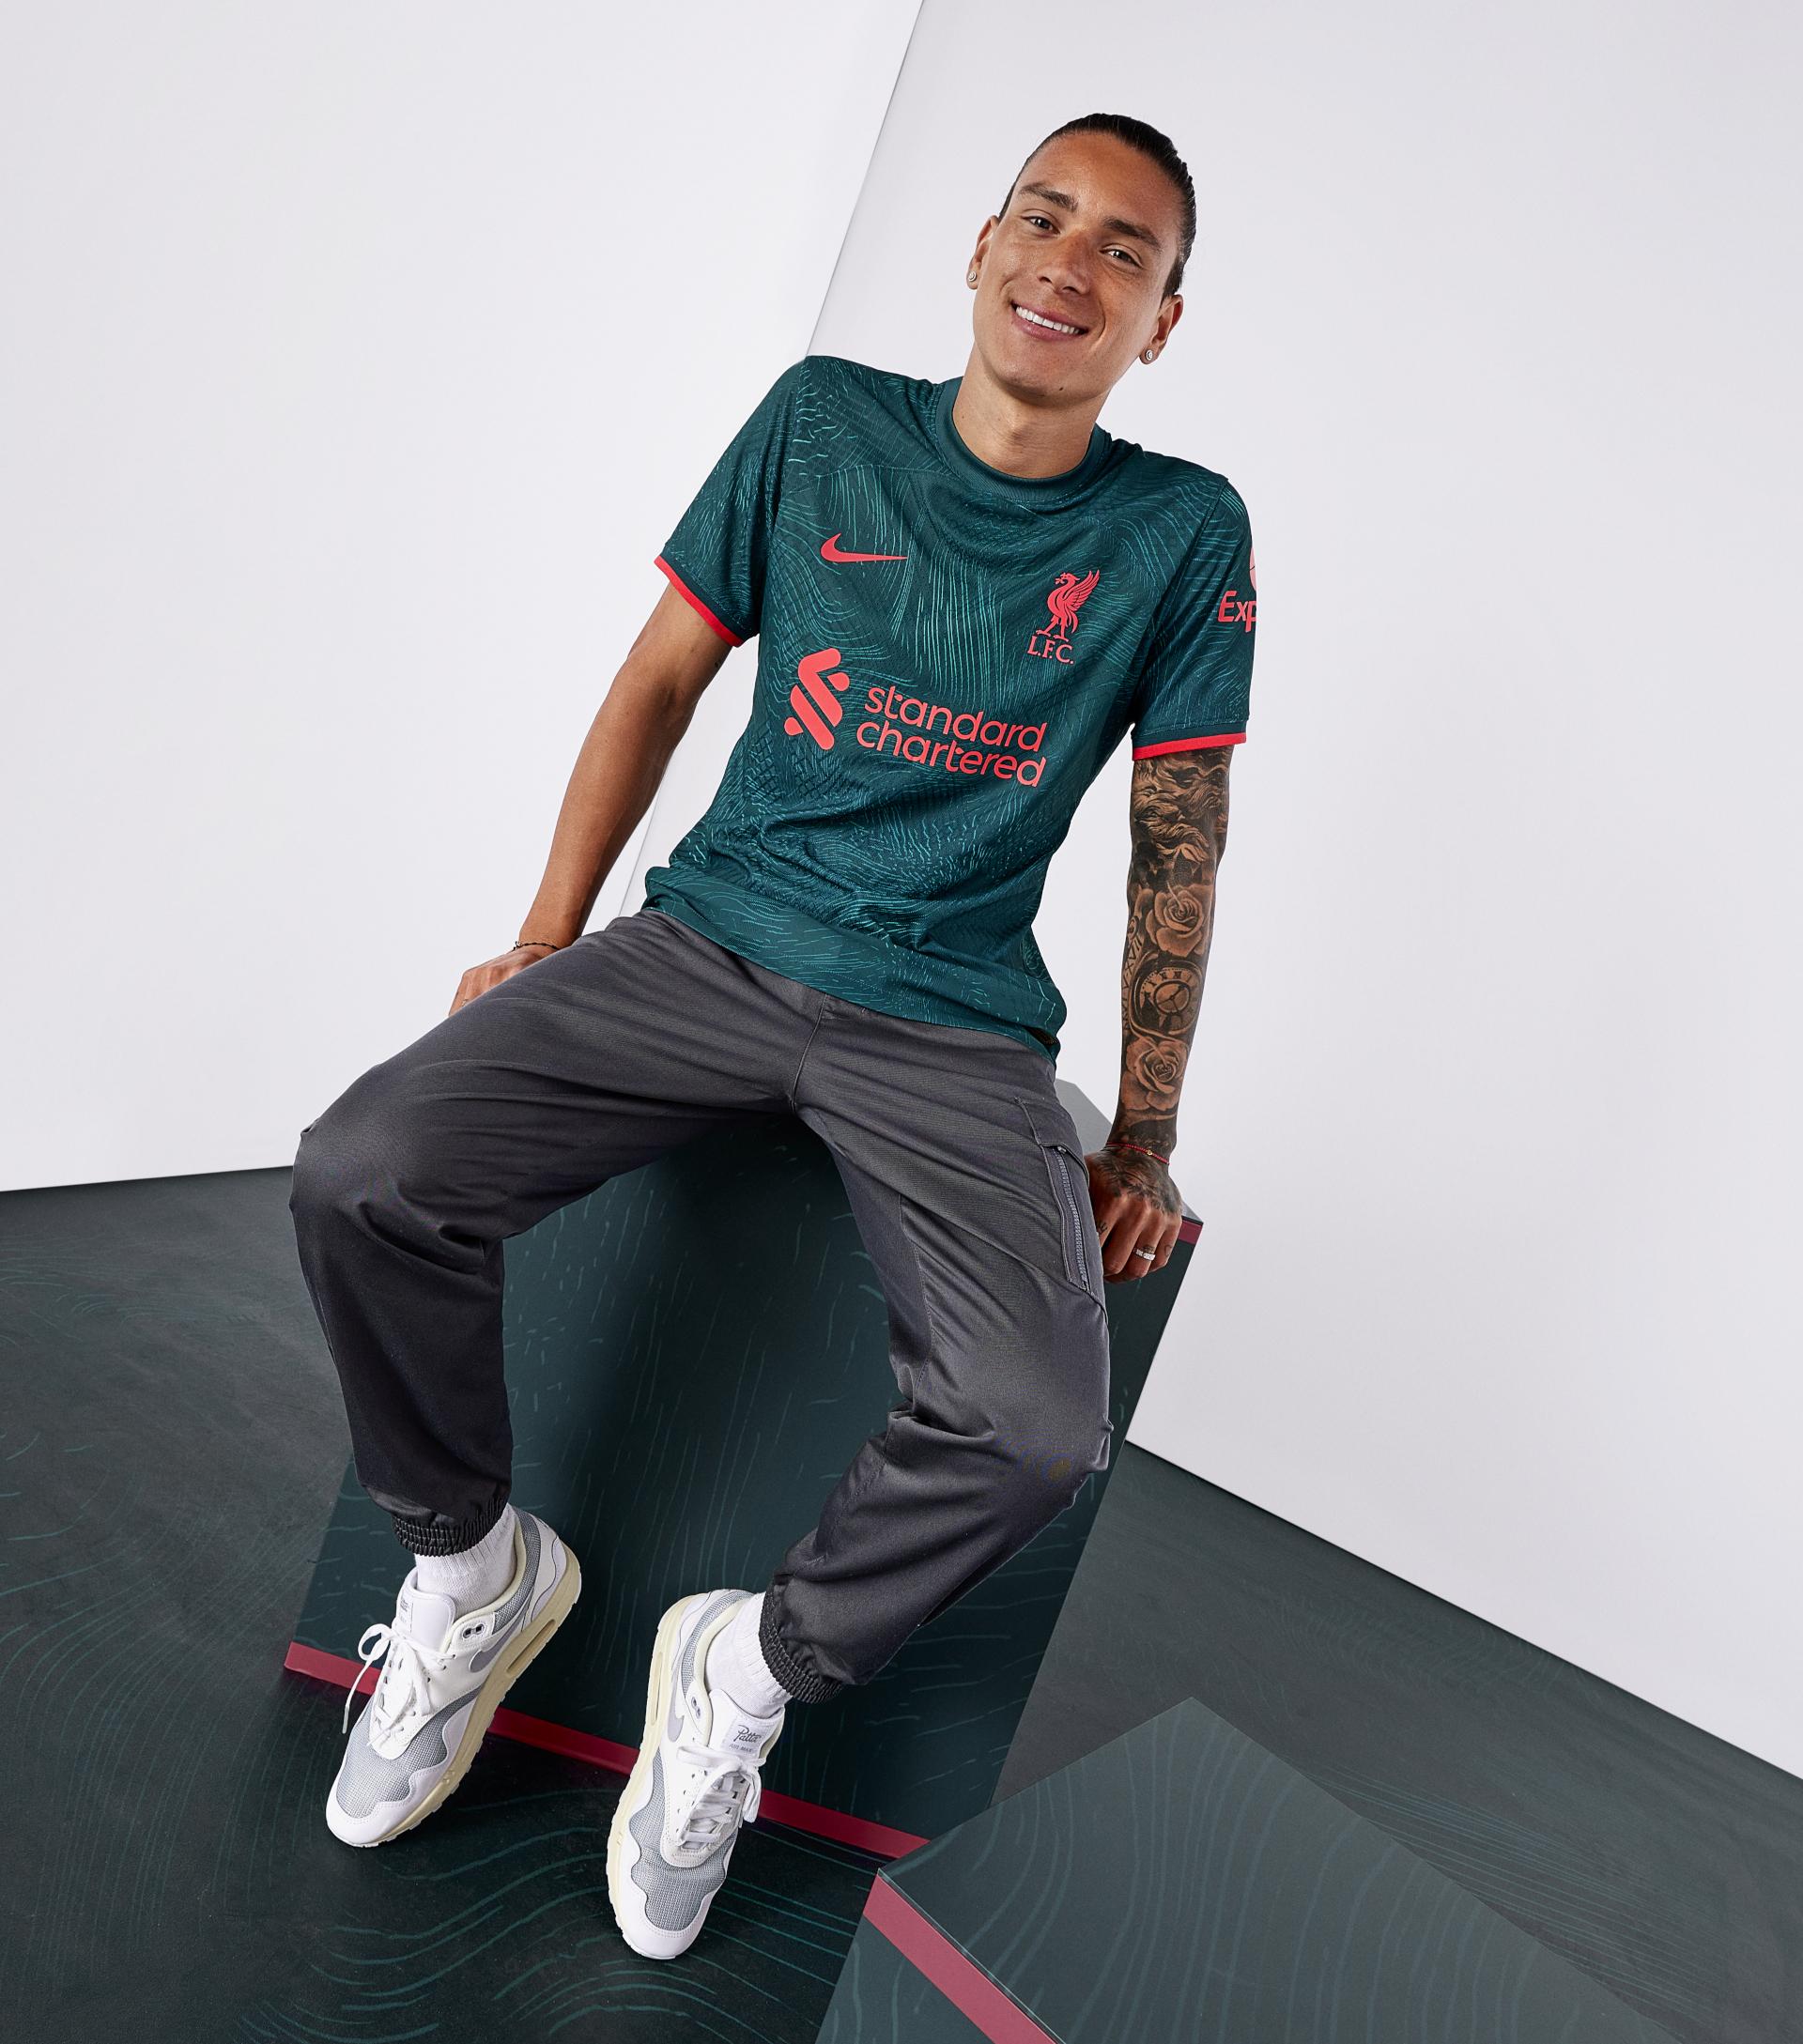 New Liverpool third kit: Liverpool unveil latest bizarre Warrior